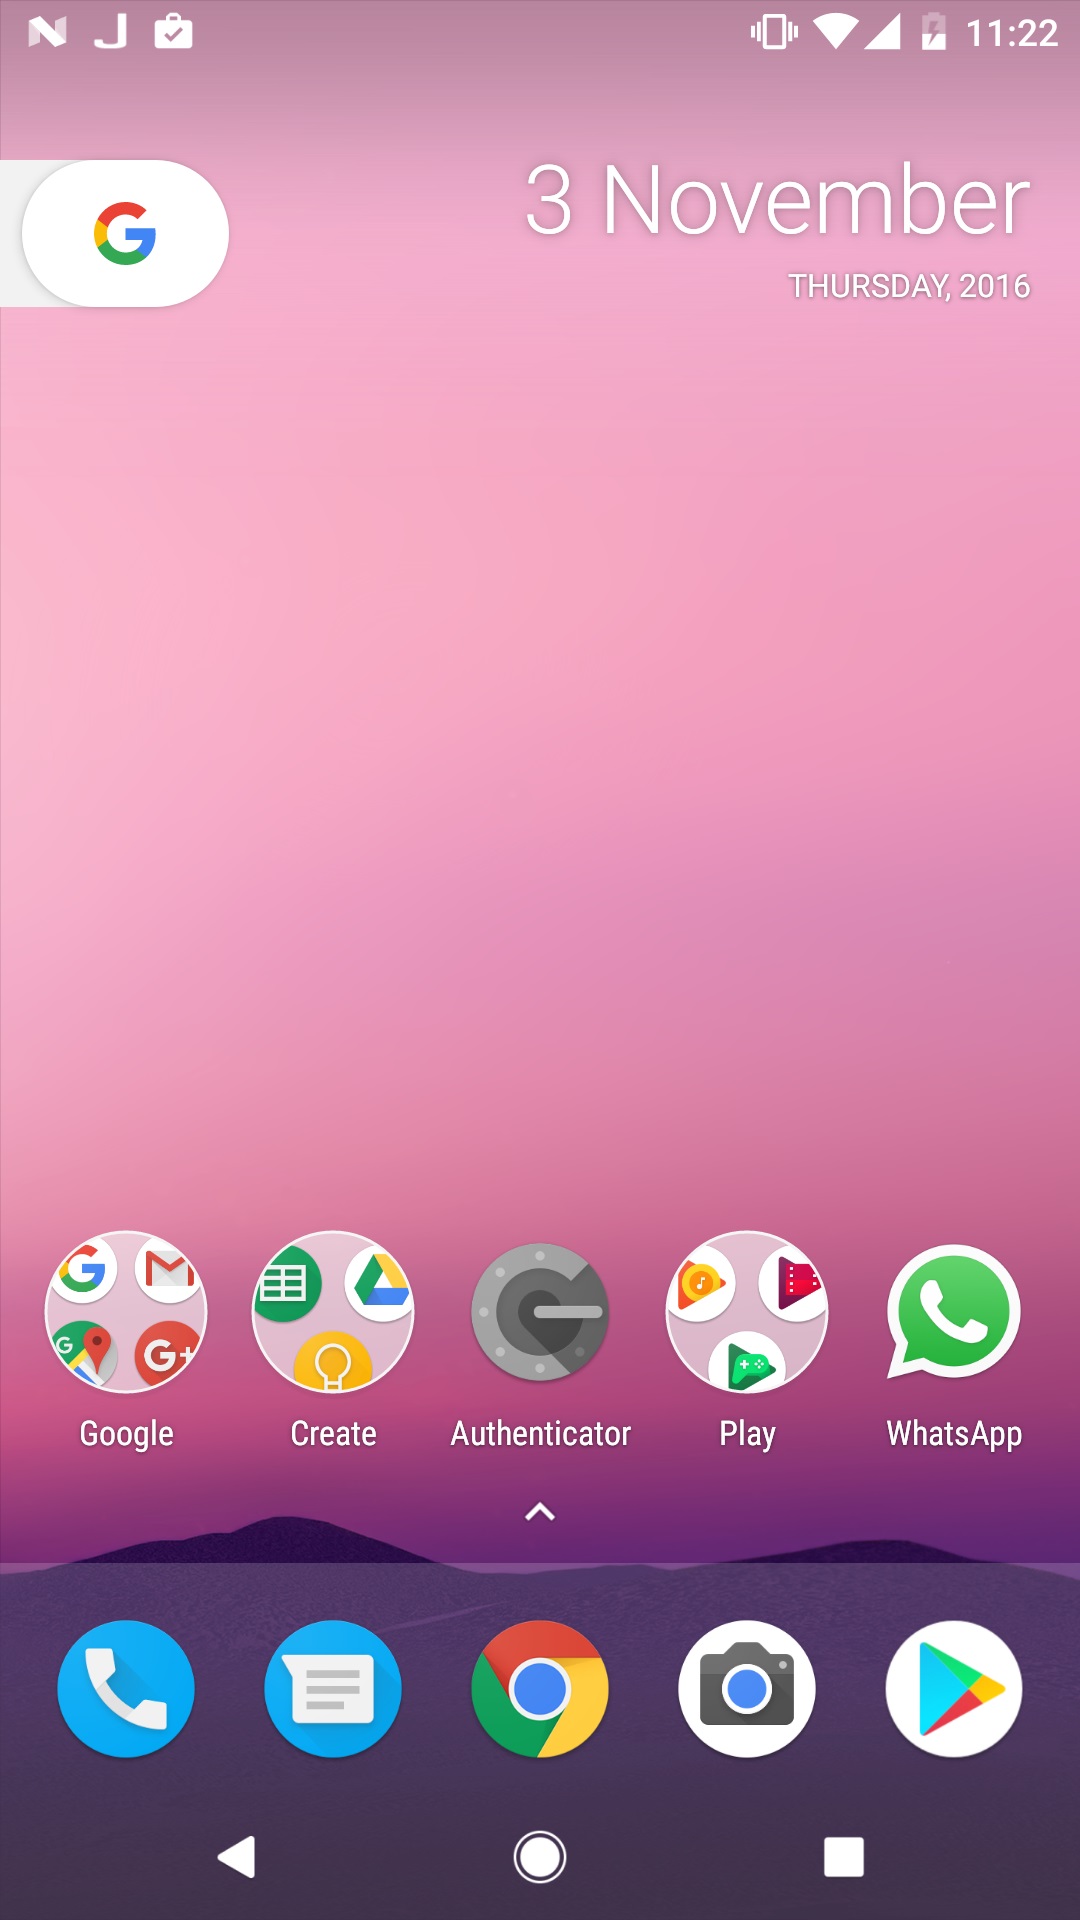 android 7.0 nougat wallpaper,bildschirmfoto,text,symbol,technologie,schriftart